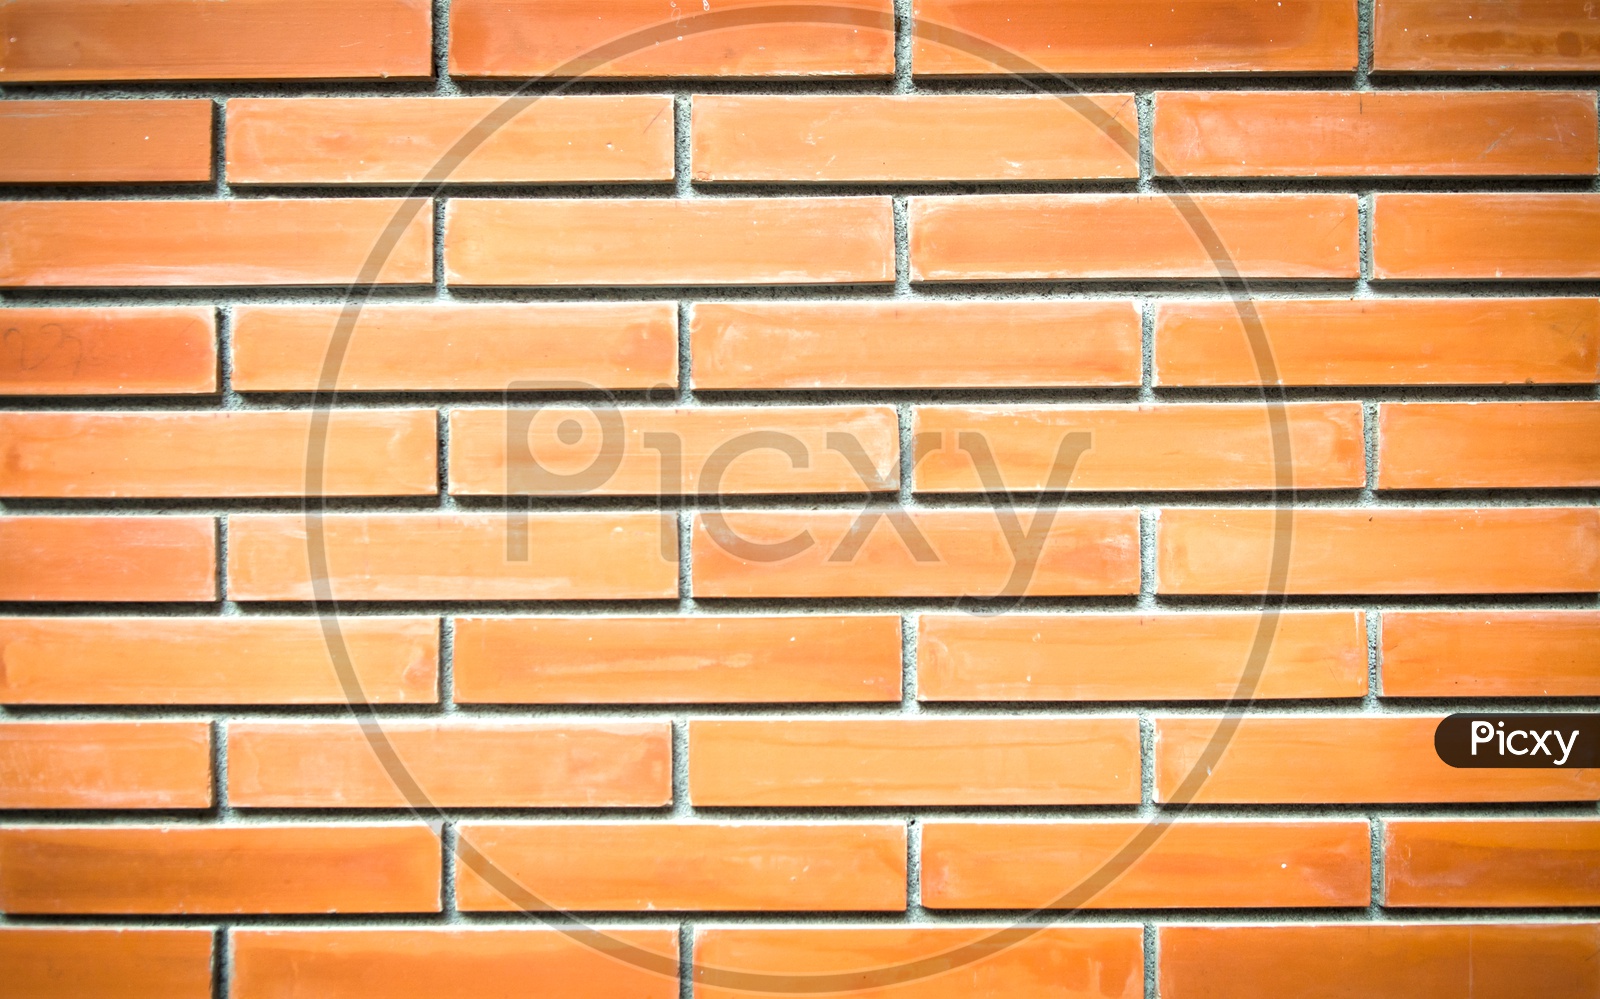 Orange brick wall background